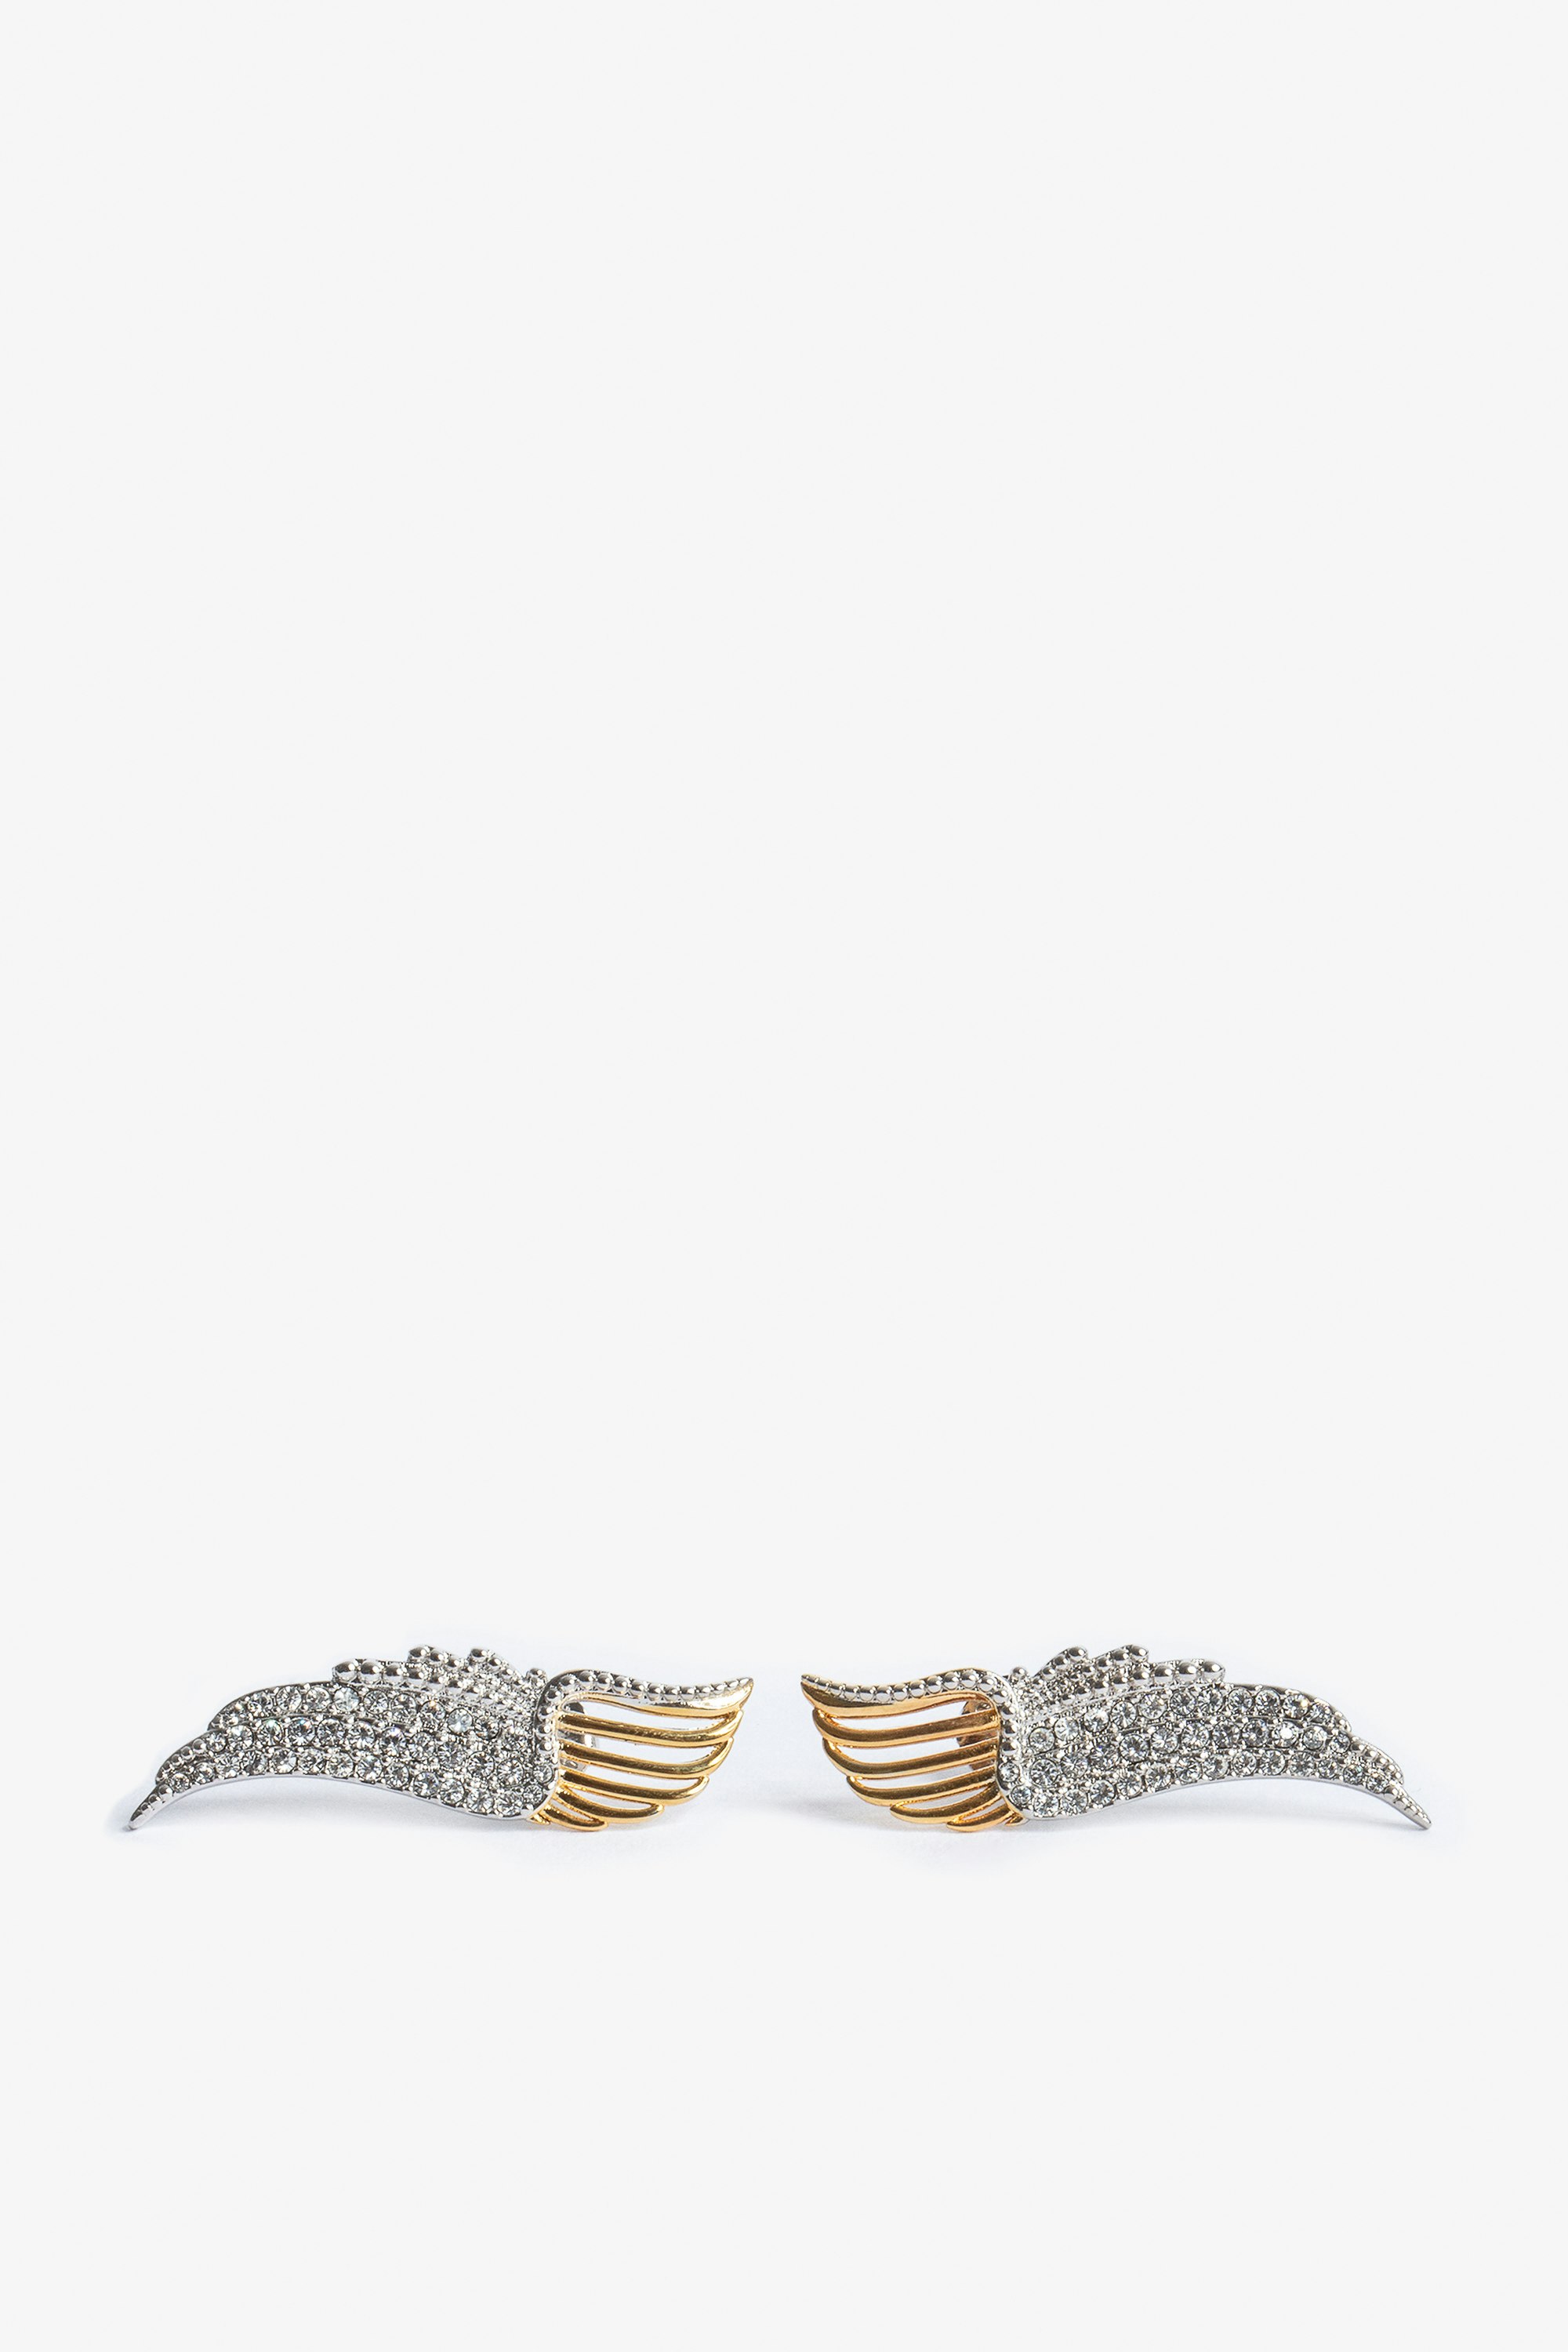 Rock Over Earrings Women's crystal-embellished gold-tone metal wings earrings.